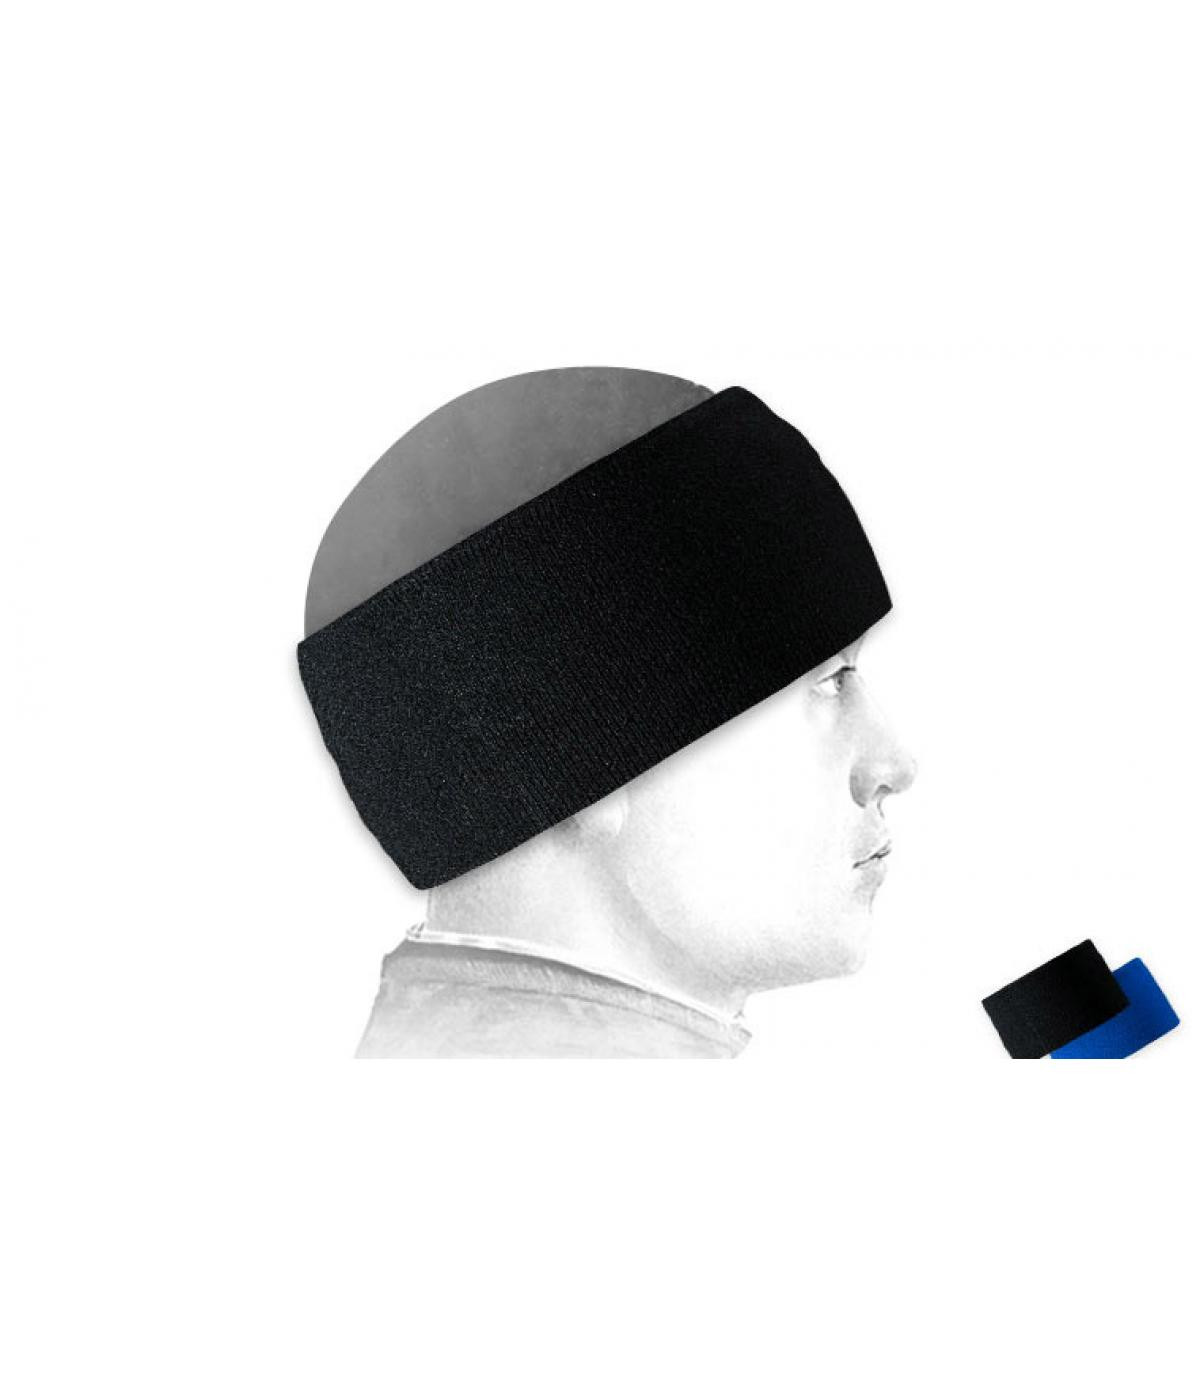 Fascia sci nero - Sunrise Headband nero Barts : Headict